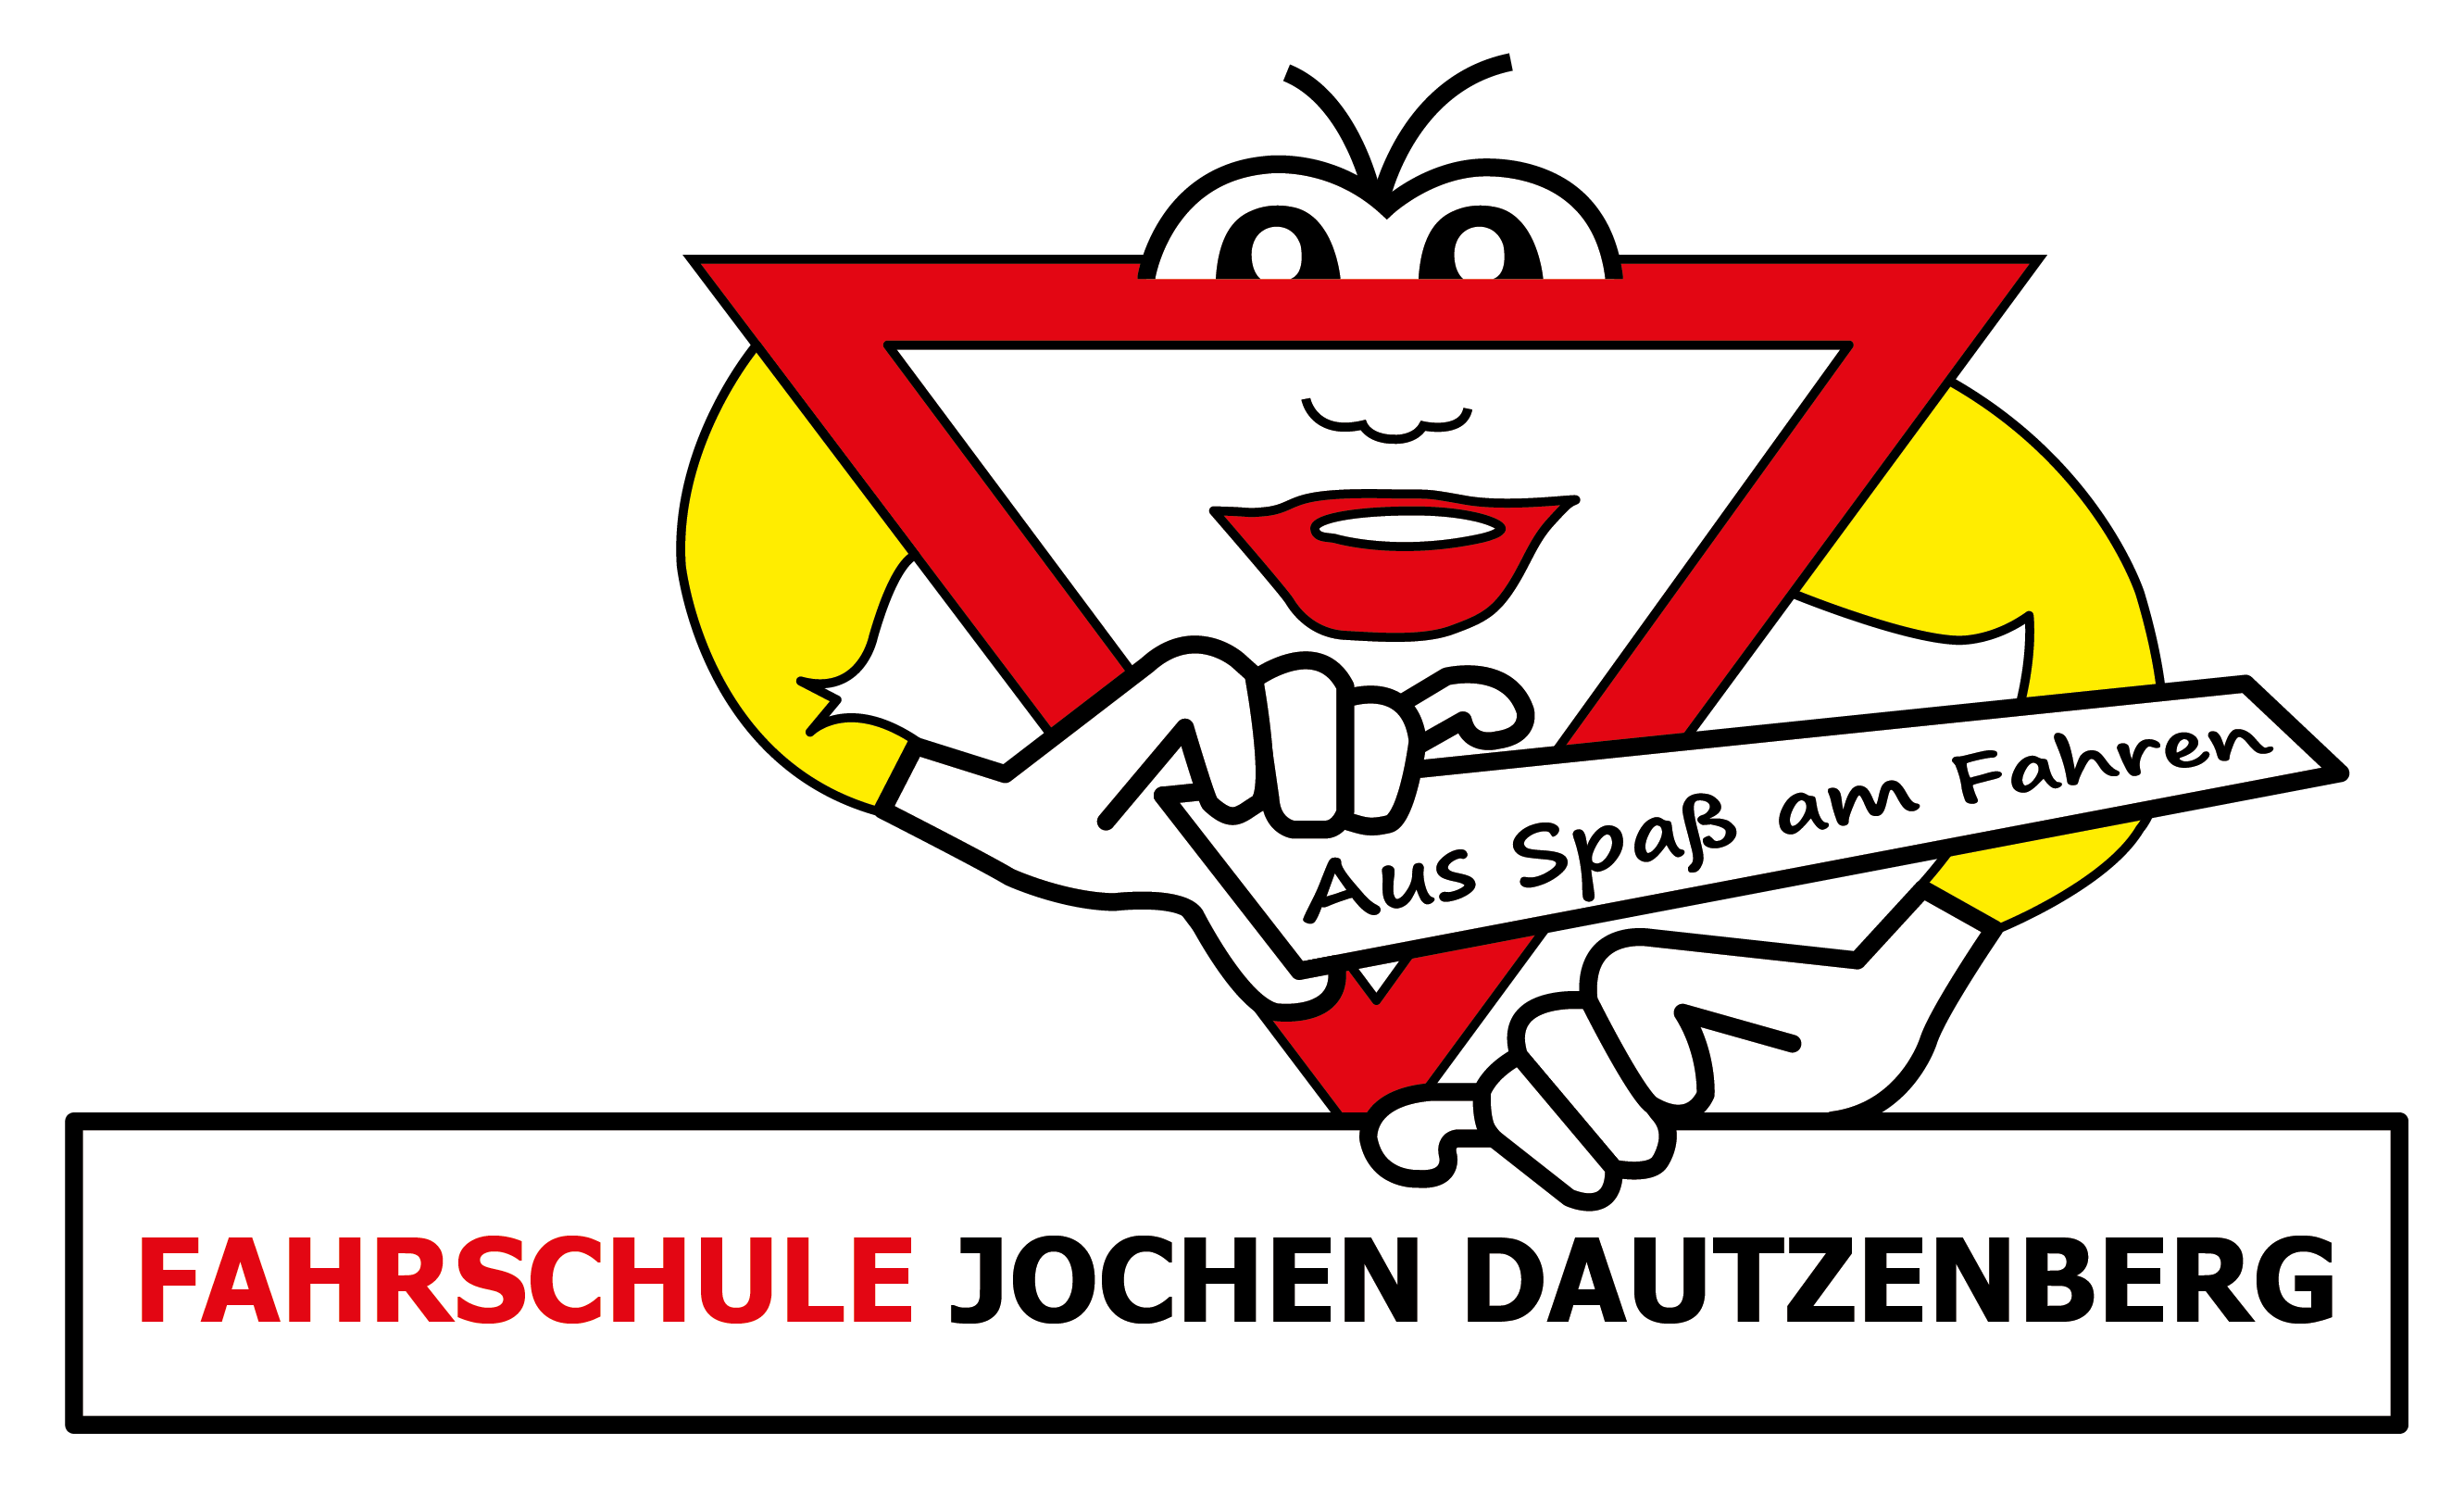 Fahrschule Jochen Dautzenberg